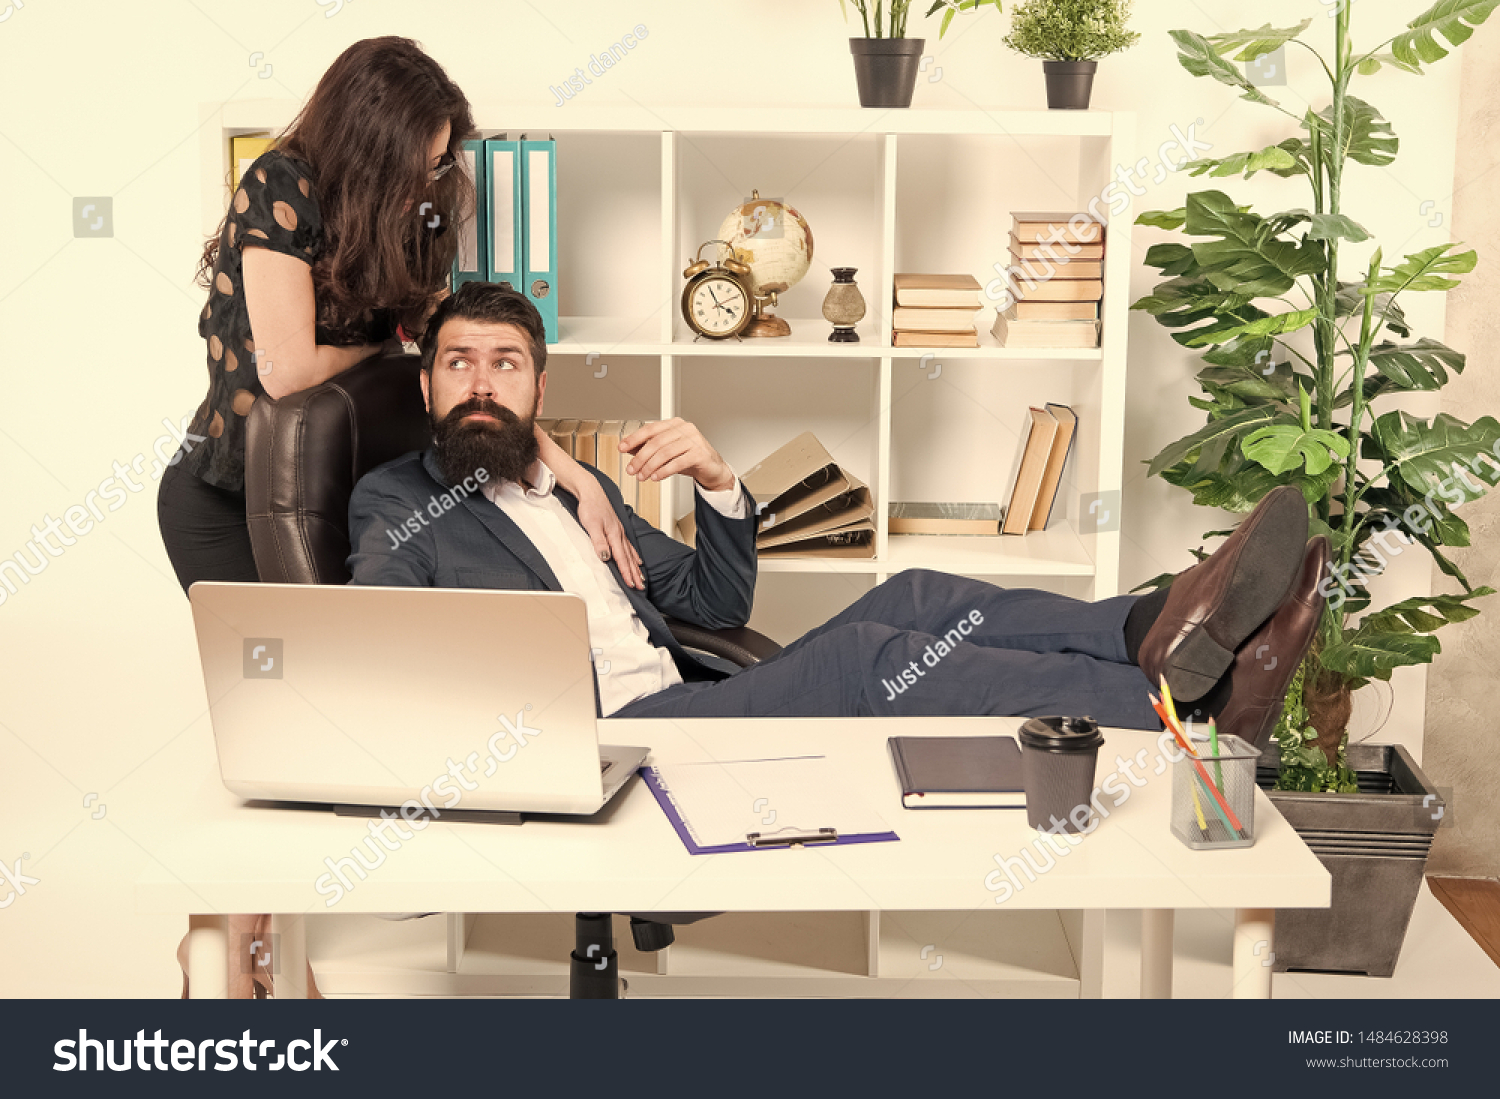 Sexy Office Secretary